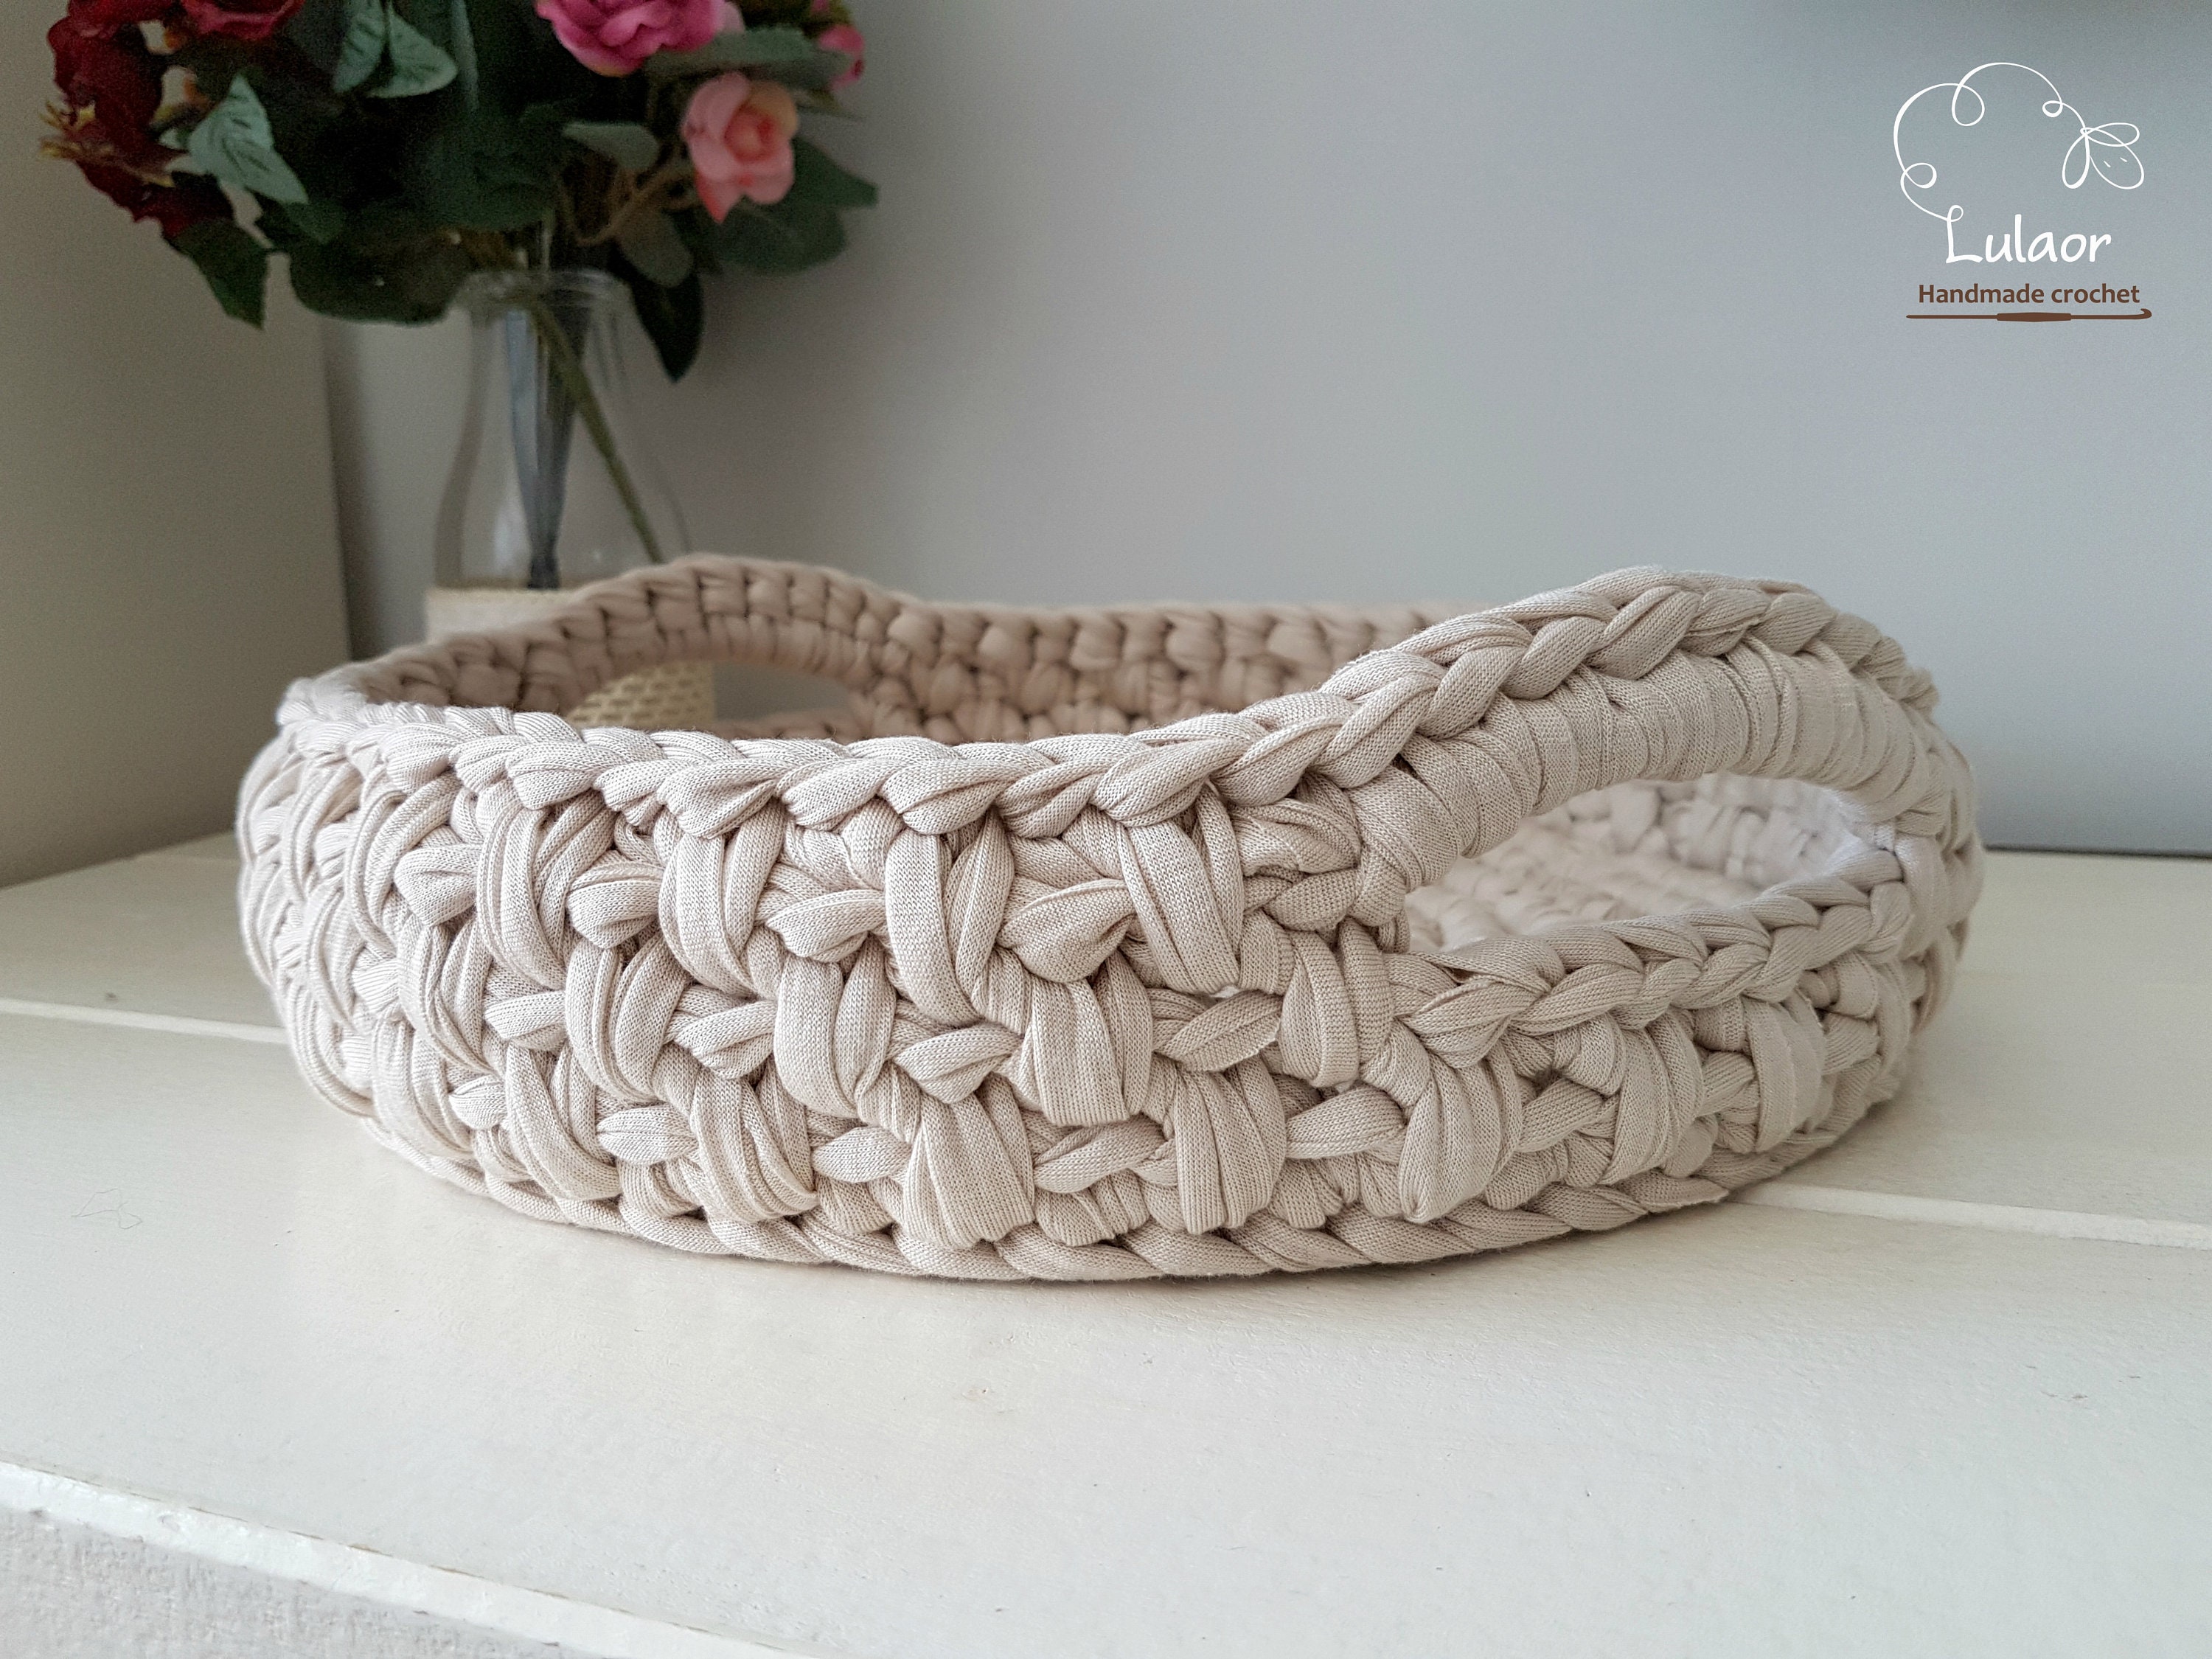 Ravelry: How to Cut T-shirt Yarn and Crochet a Basket pattern by Naztazia